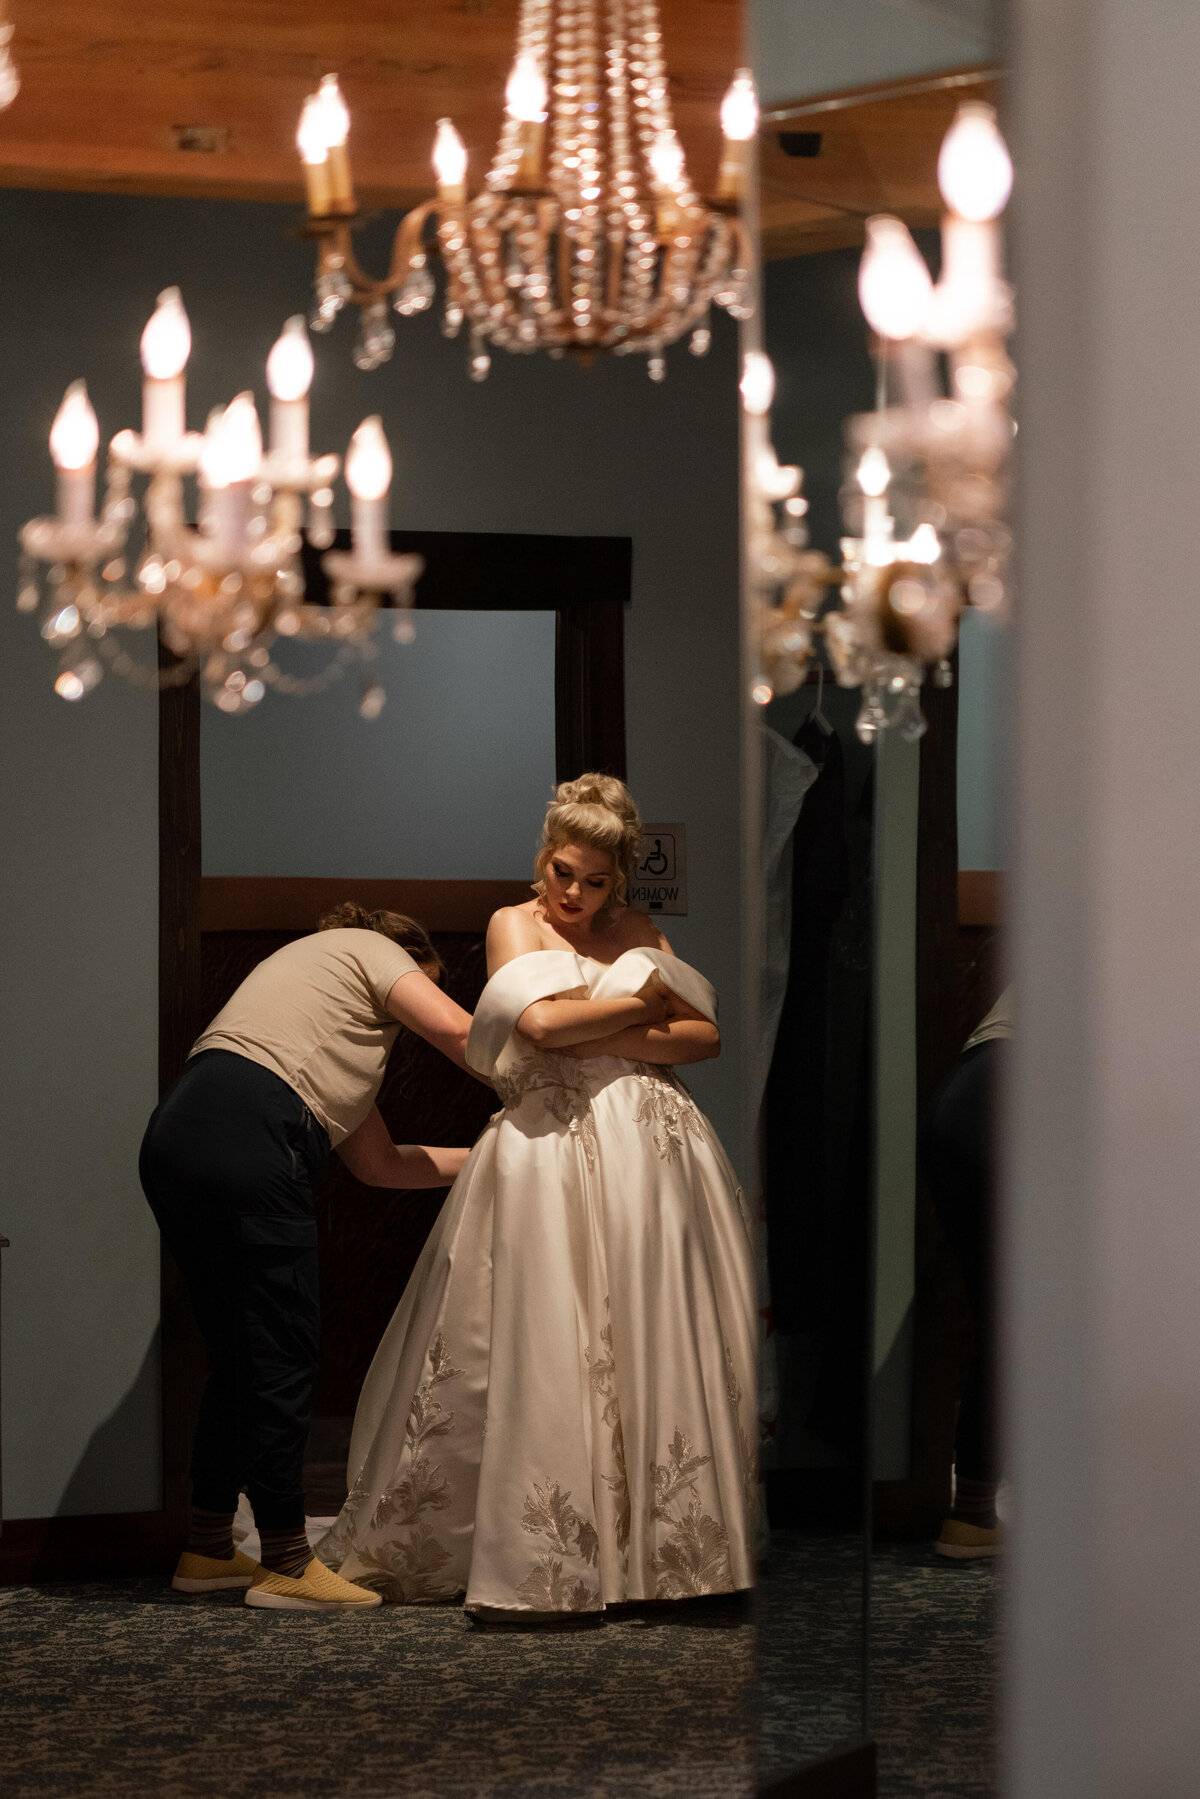 Erin and Bill - Minnesota Wedding Photography - Abulae - Saint Paul - A'bulae - RKH Images - Getting Ready (133 of 208)